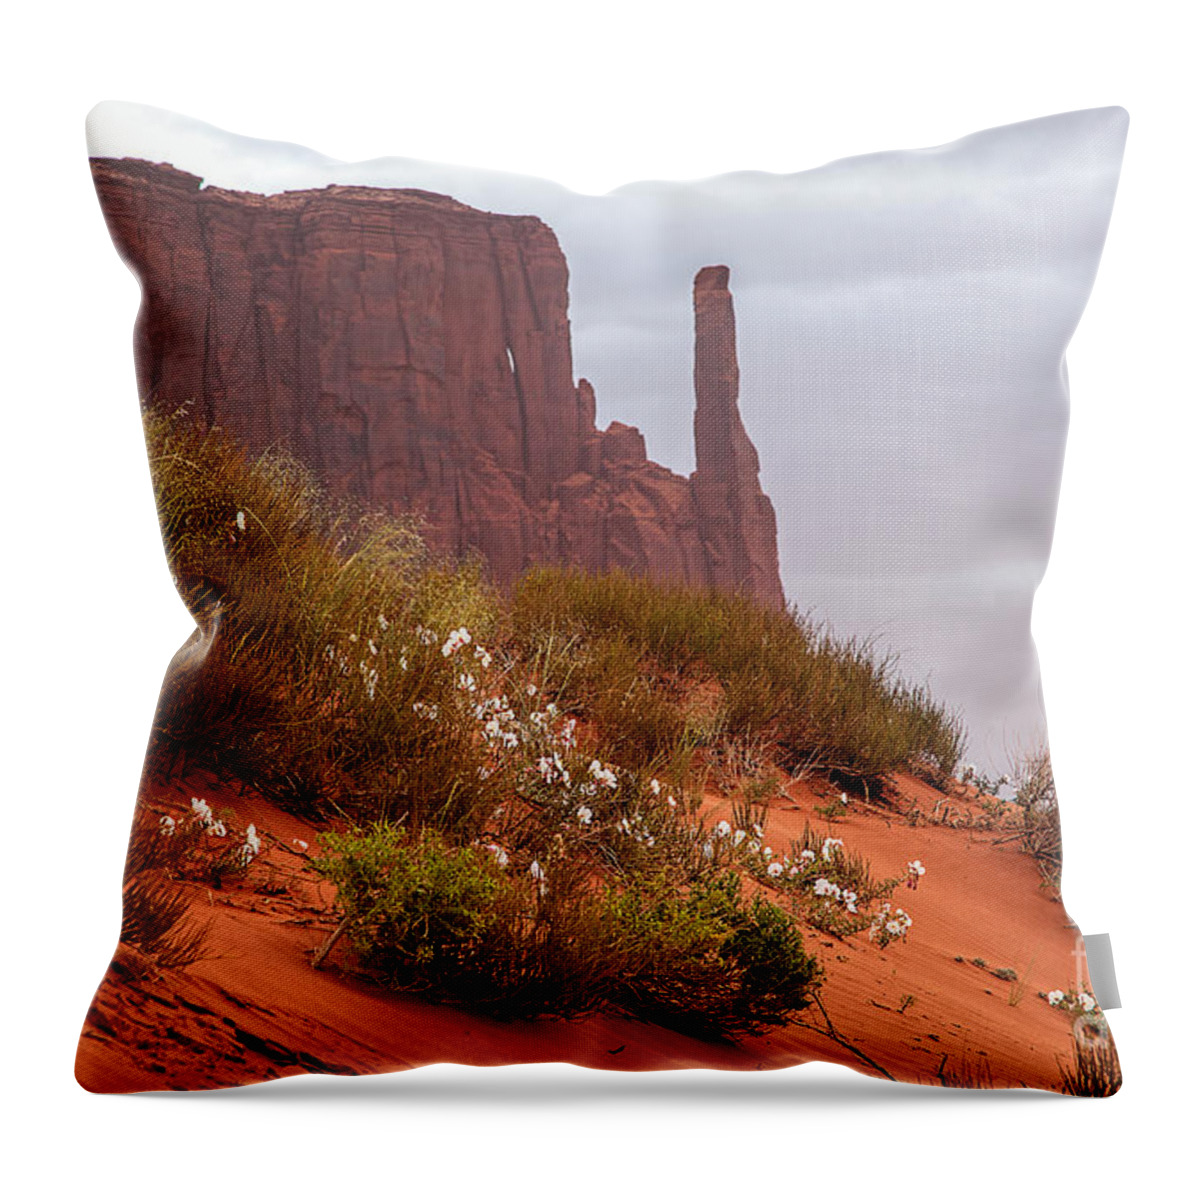 Utah Throw Pillow featuring the photograph Desert Flowers by Jim Garrison